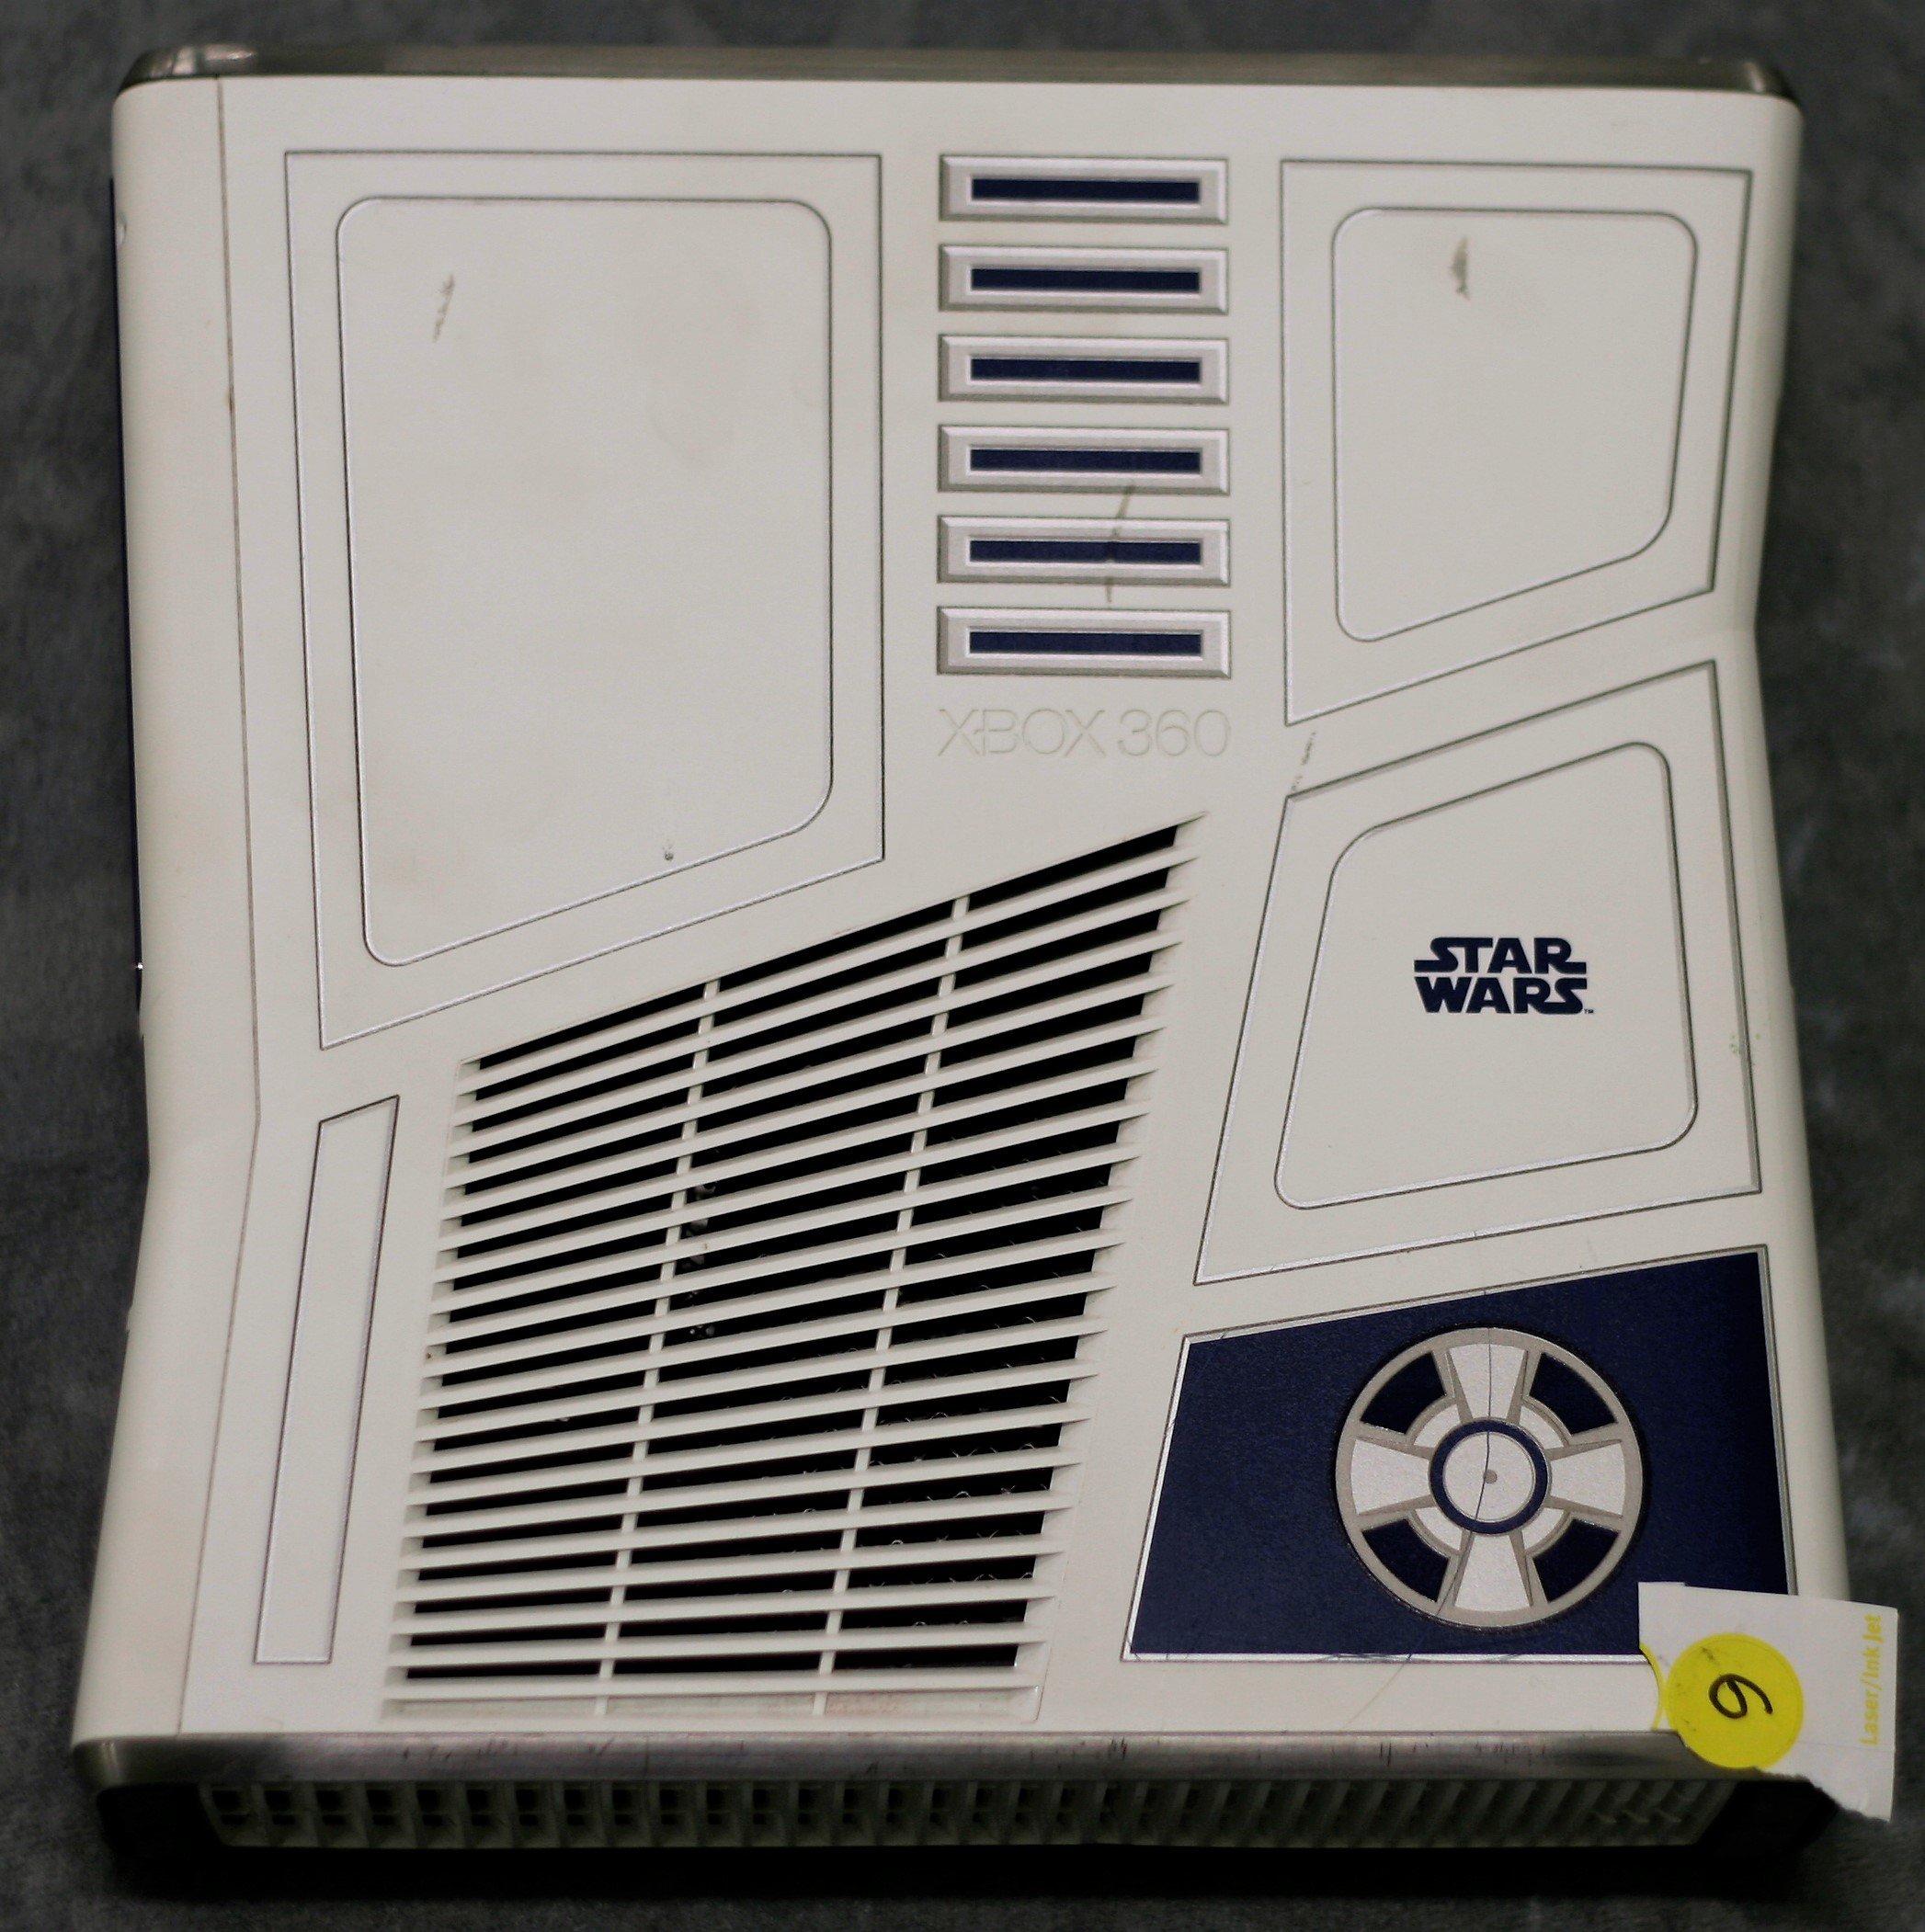 Star Wars XBOX 360 console - HTF